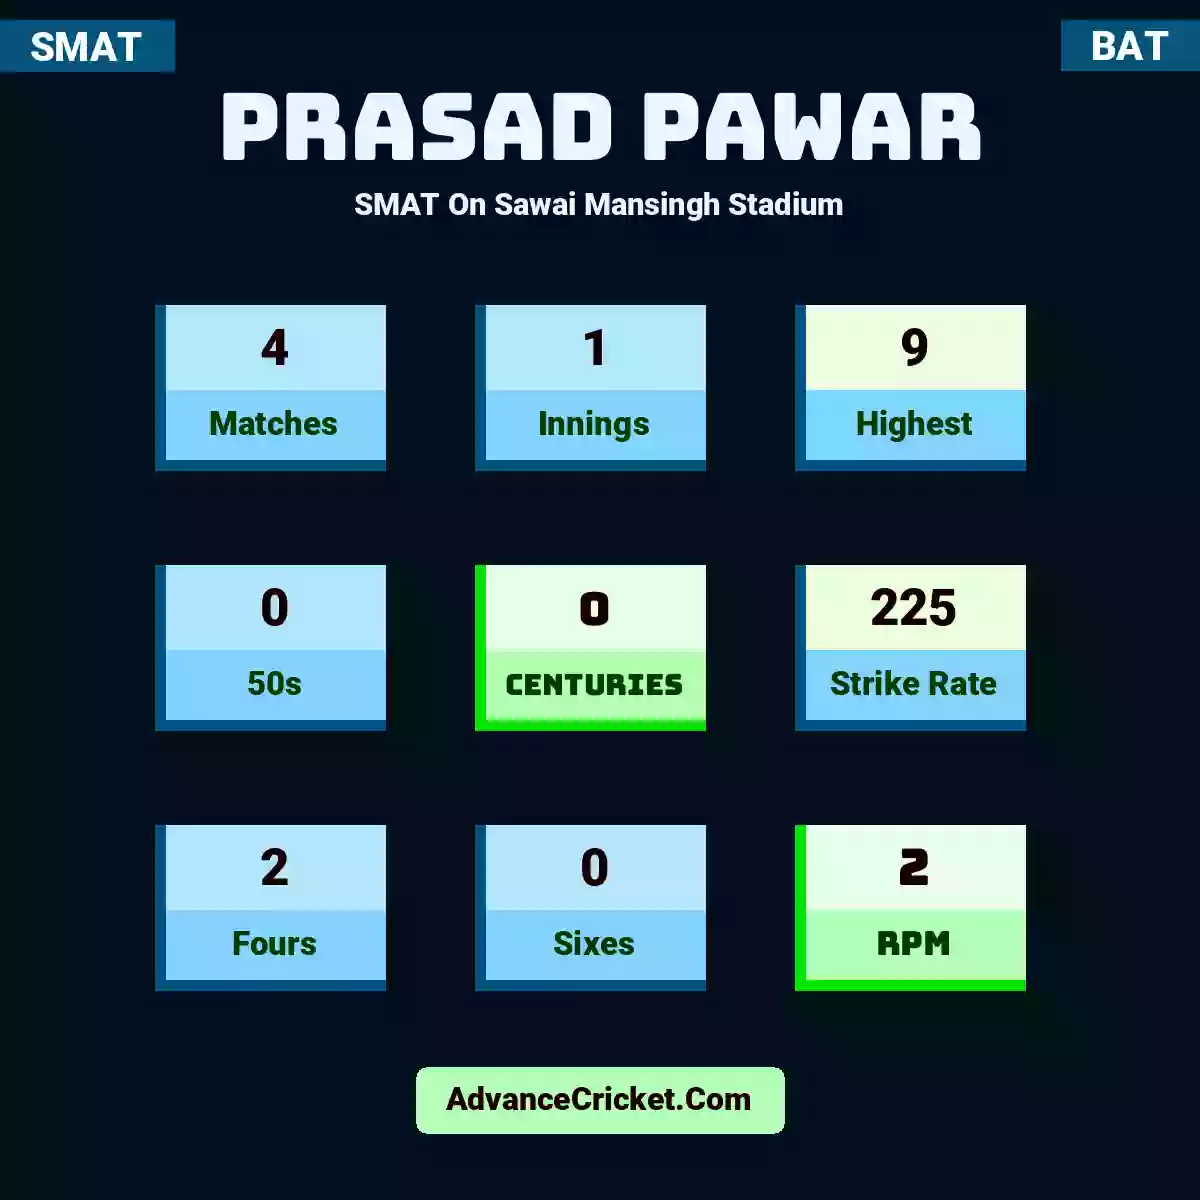 Prasad Pawar SMAT  On Sawai Mansingh Stadium, Prasad Pawar played 4 matches, scored 9 runs as highest, 0 half-centuries, and 0 centuries, with a strike rate of 225. P.Pawar hit 2 fours and 0 sixes, with an RPM of 2.